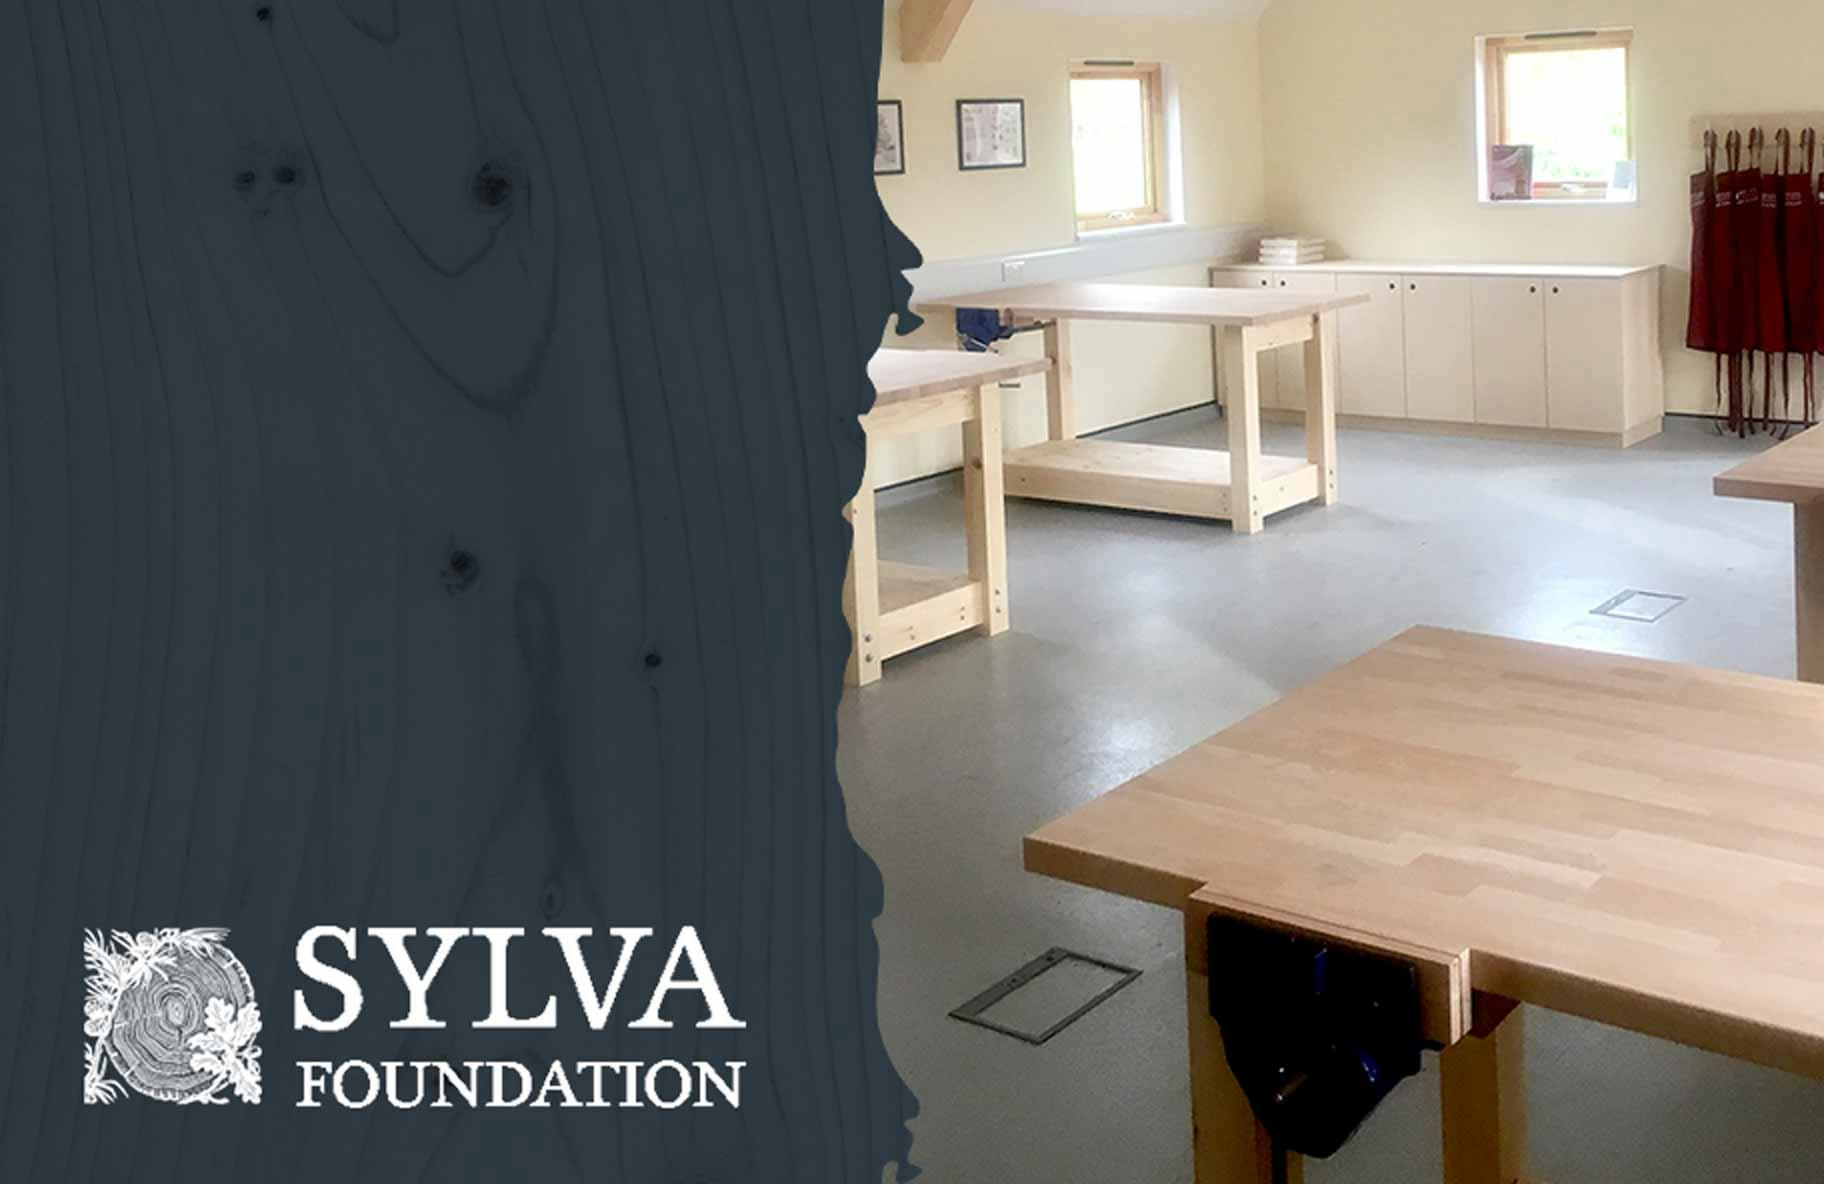 Sylvia Foundation